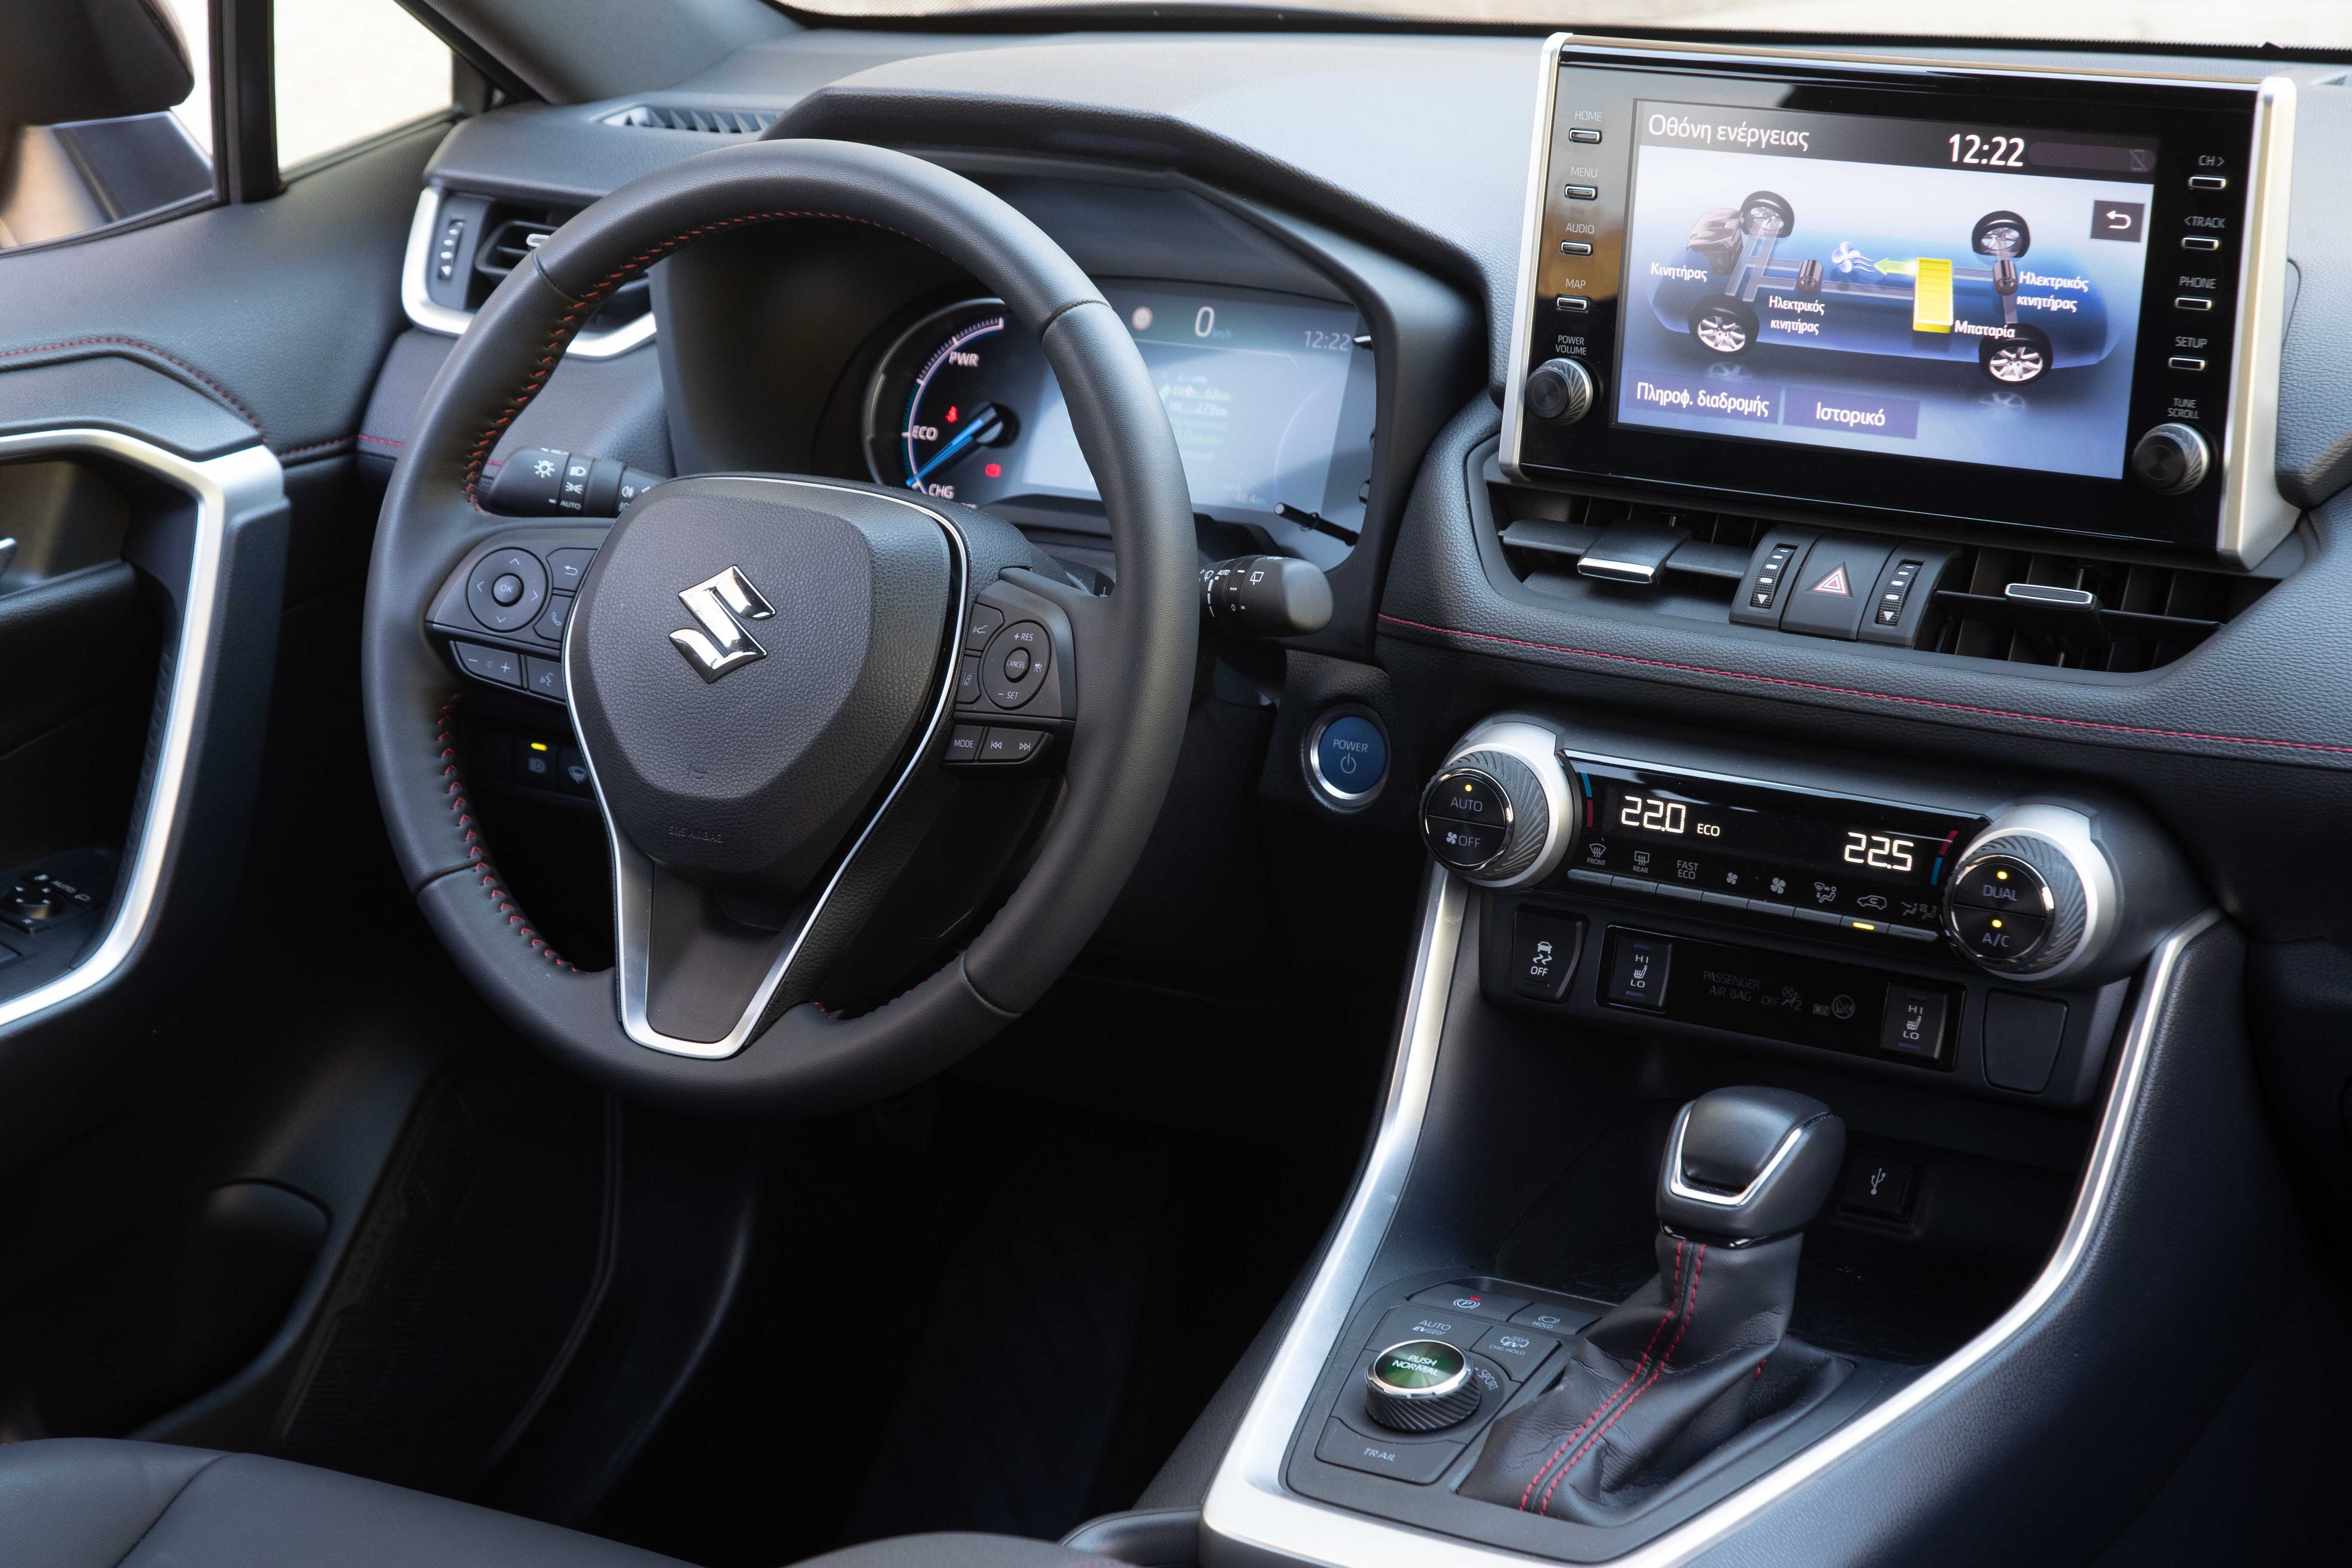 Test drive: Suzuki Across, Photo credit DRIVE Media Group/ Thanasis Koutsogiannis